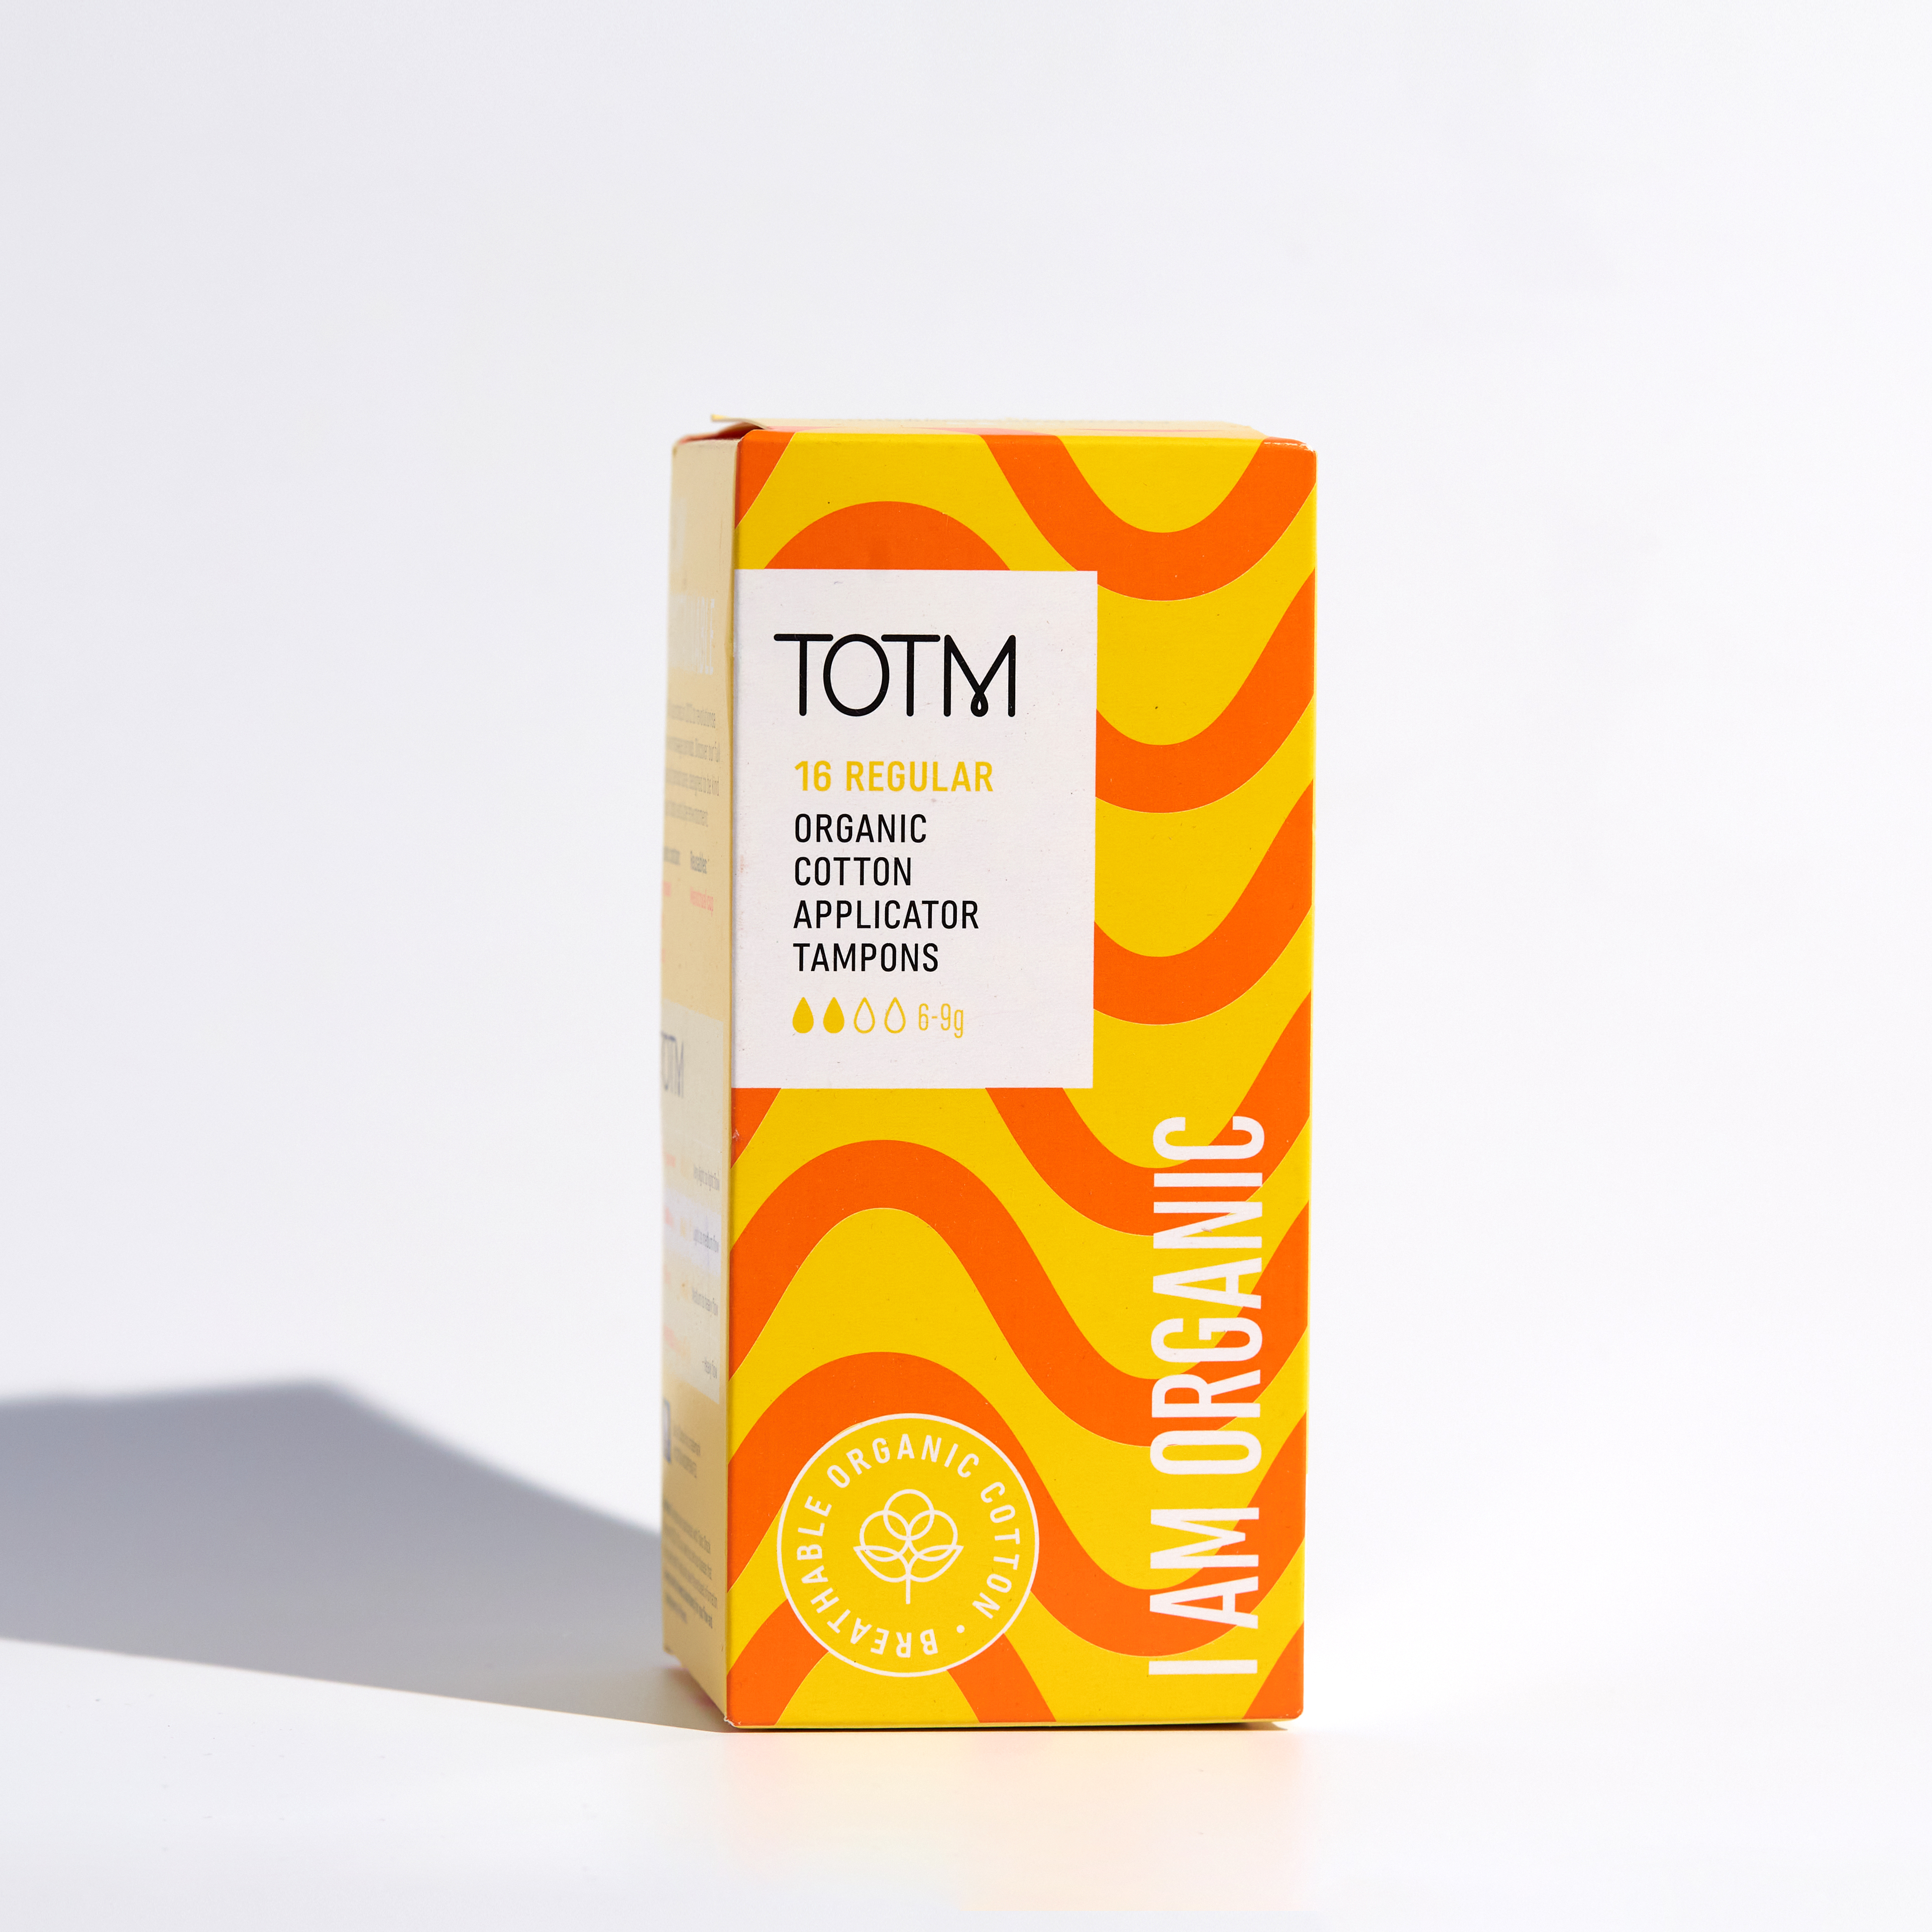 TOTM Organic Cotton Applicator Tampons  Regular (x16) - 5 packs